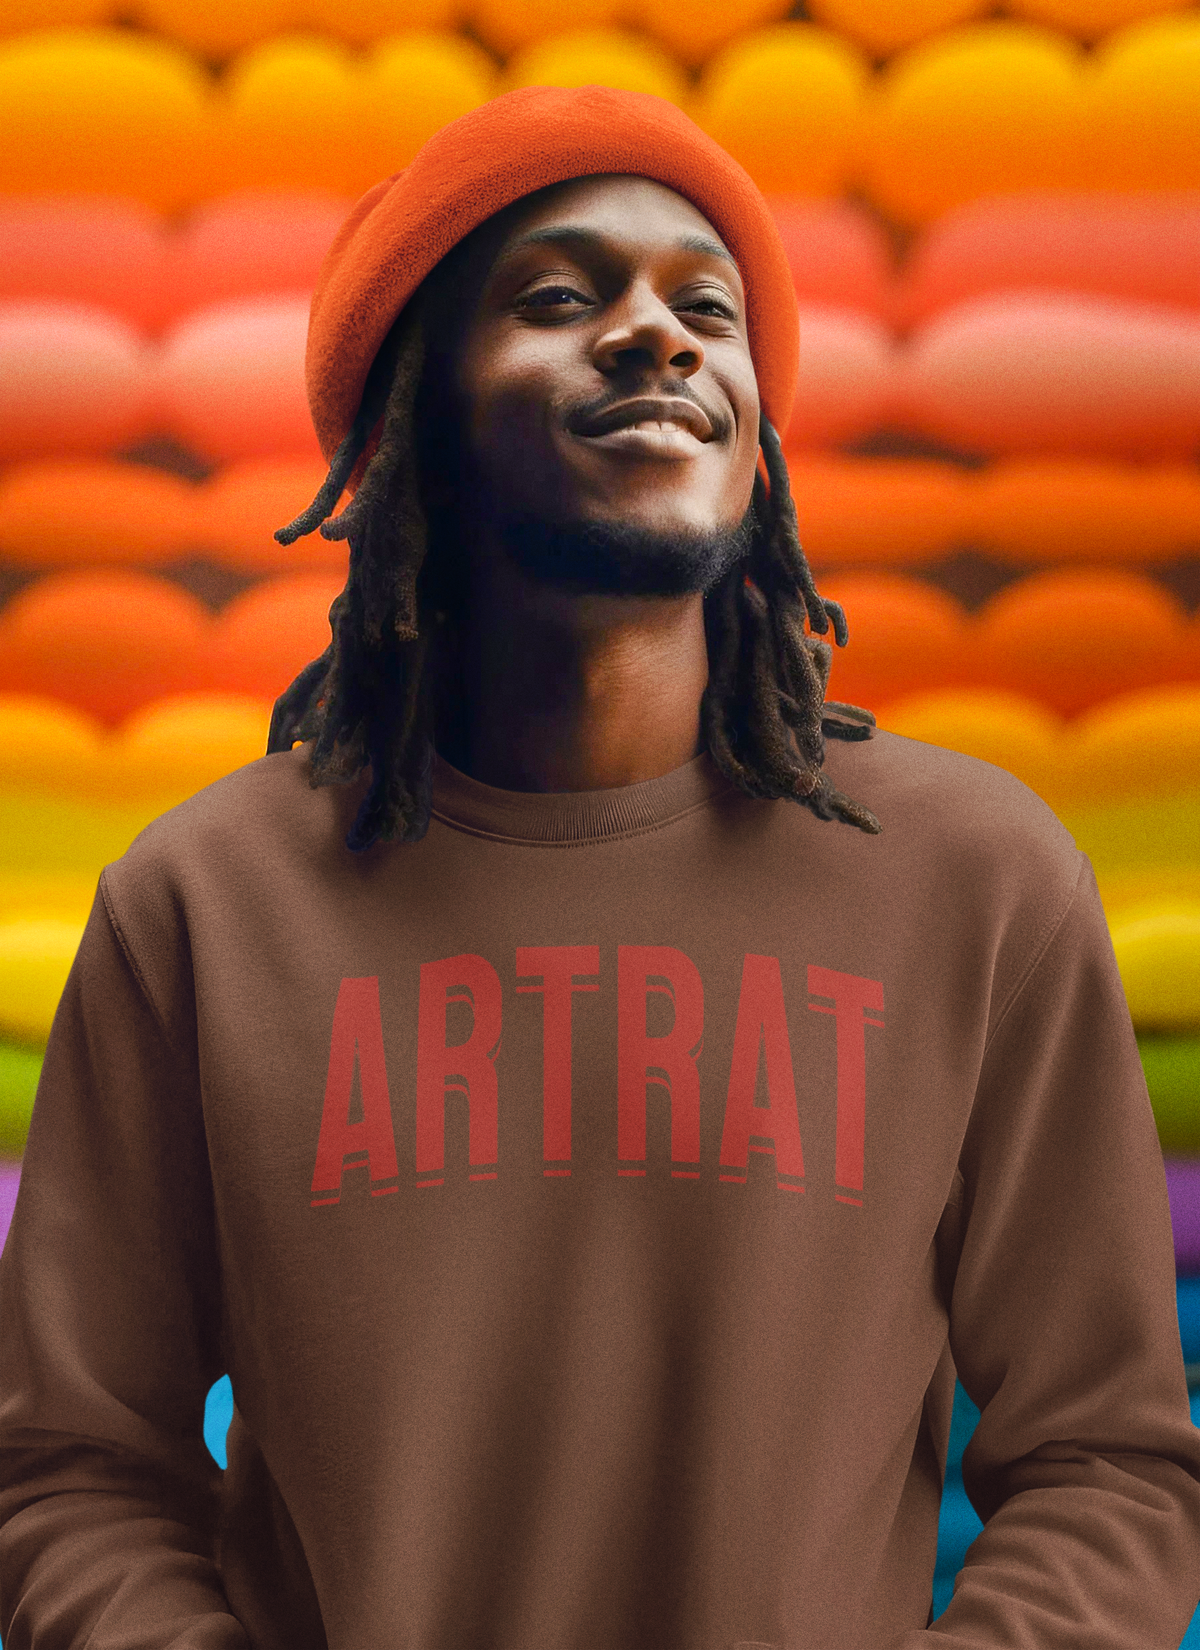 Artists Favorite! Cozy ArtRat Gallery Unisex NuBlend® Crewneck Sweatshirt in Chocolate Brown